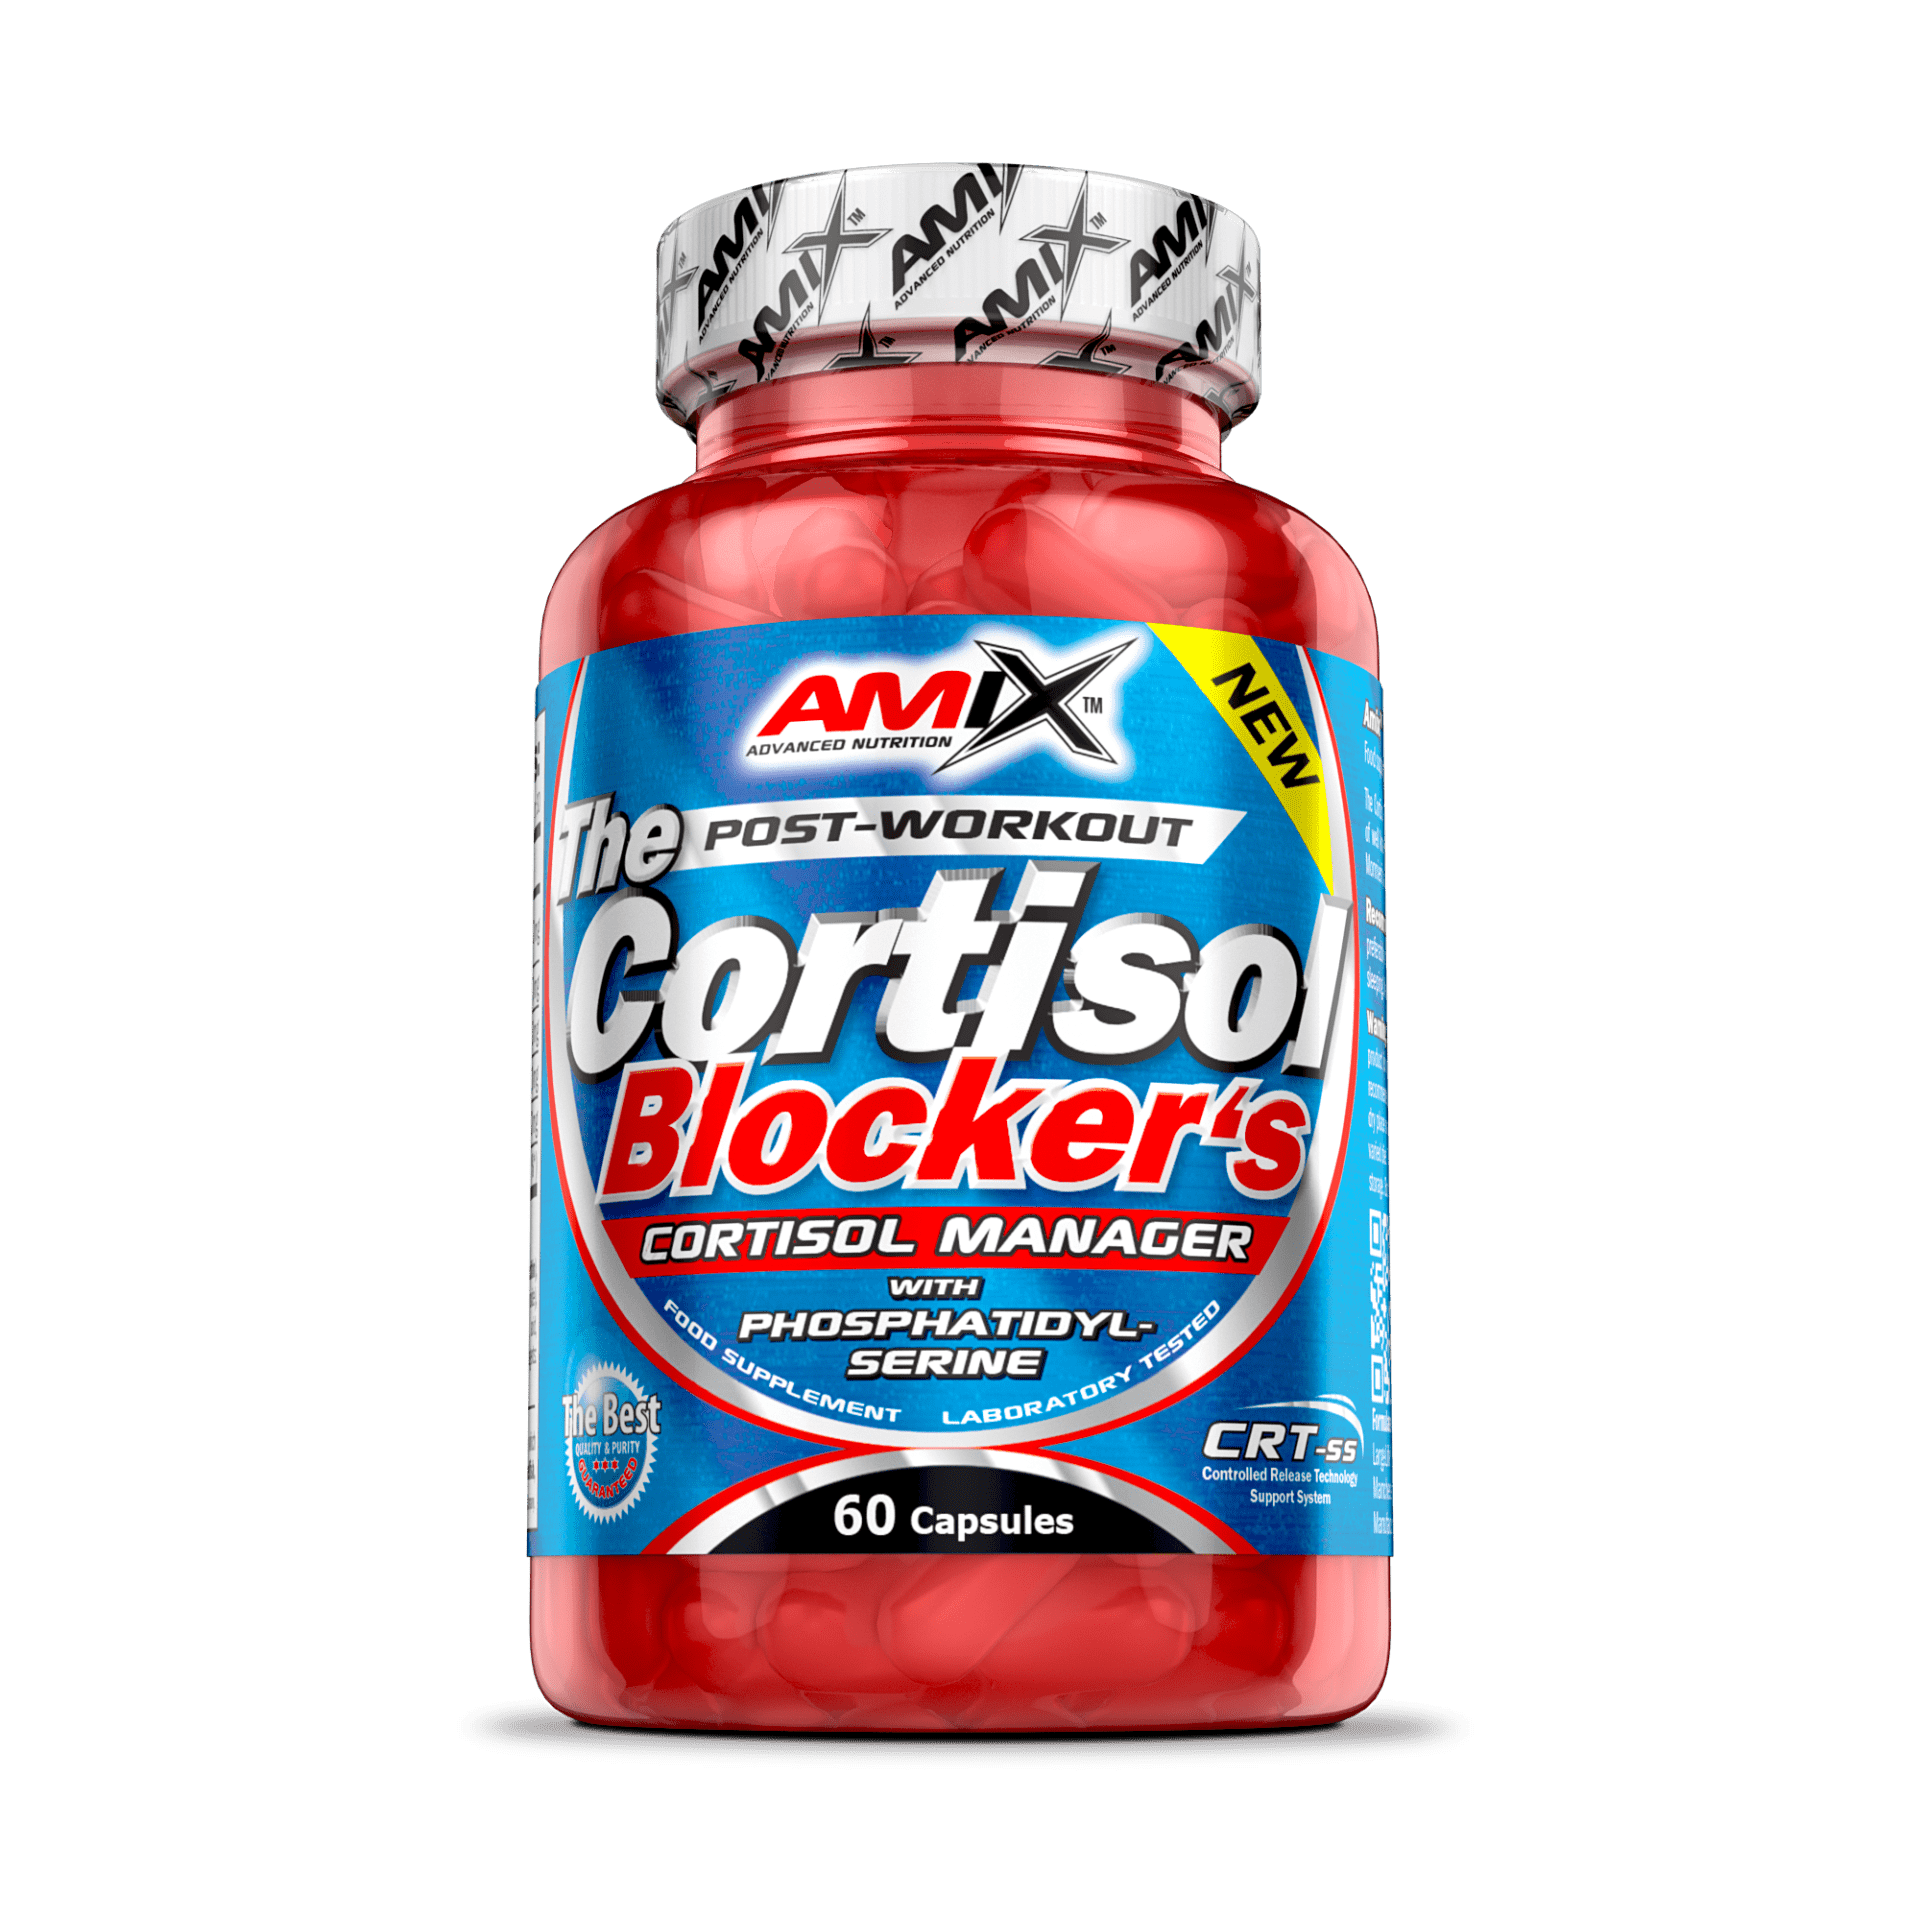 Cortisol Blocker's post workout amix